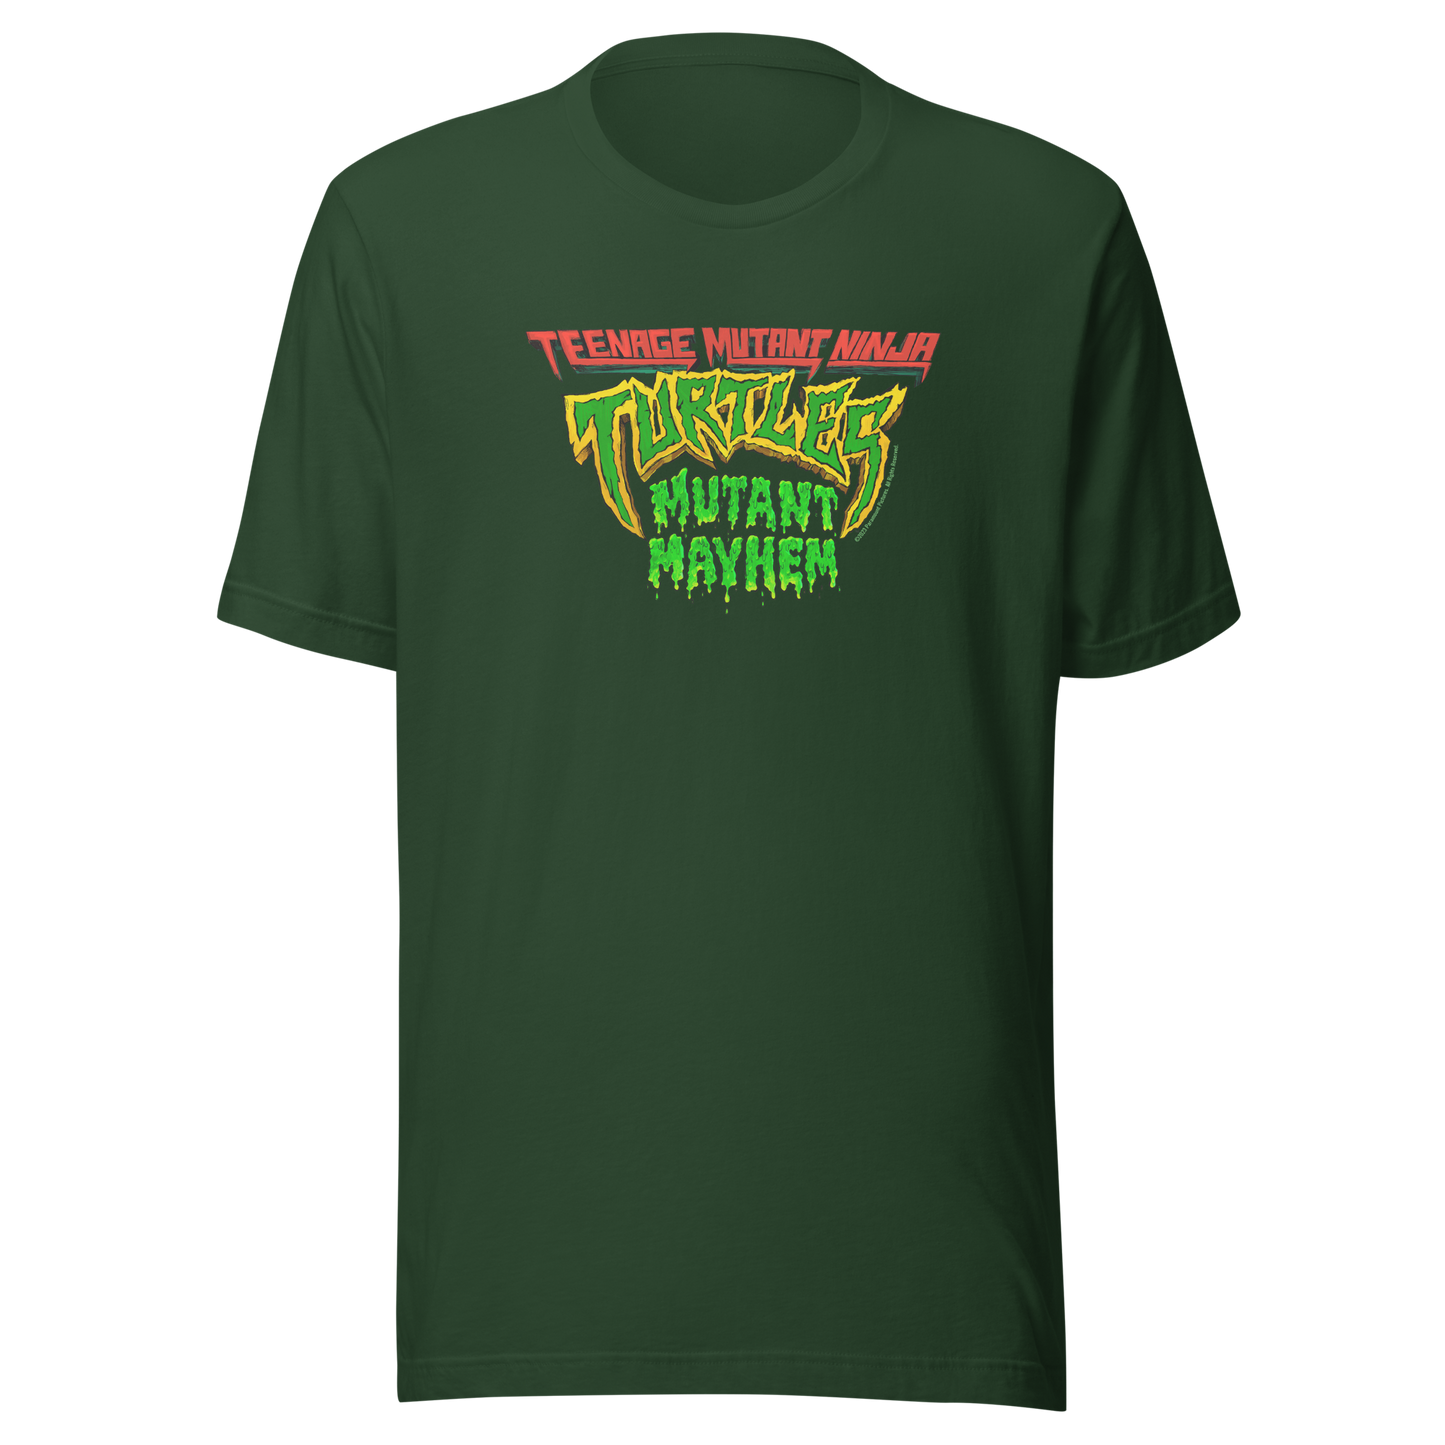 Teenage Mutant Ninja Turtles: Caos mutante Logo Adultos Camiseta de manga corta